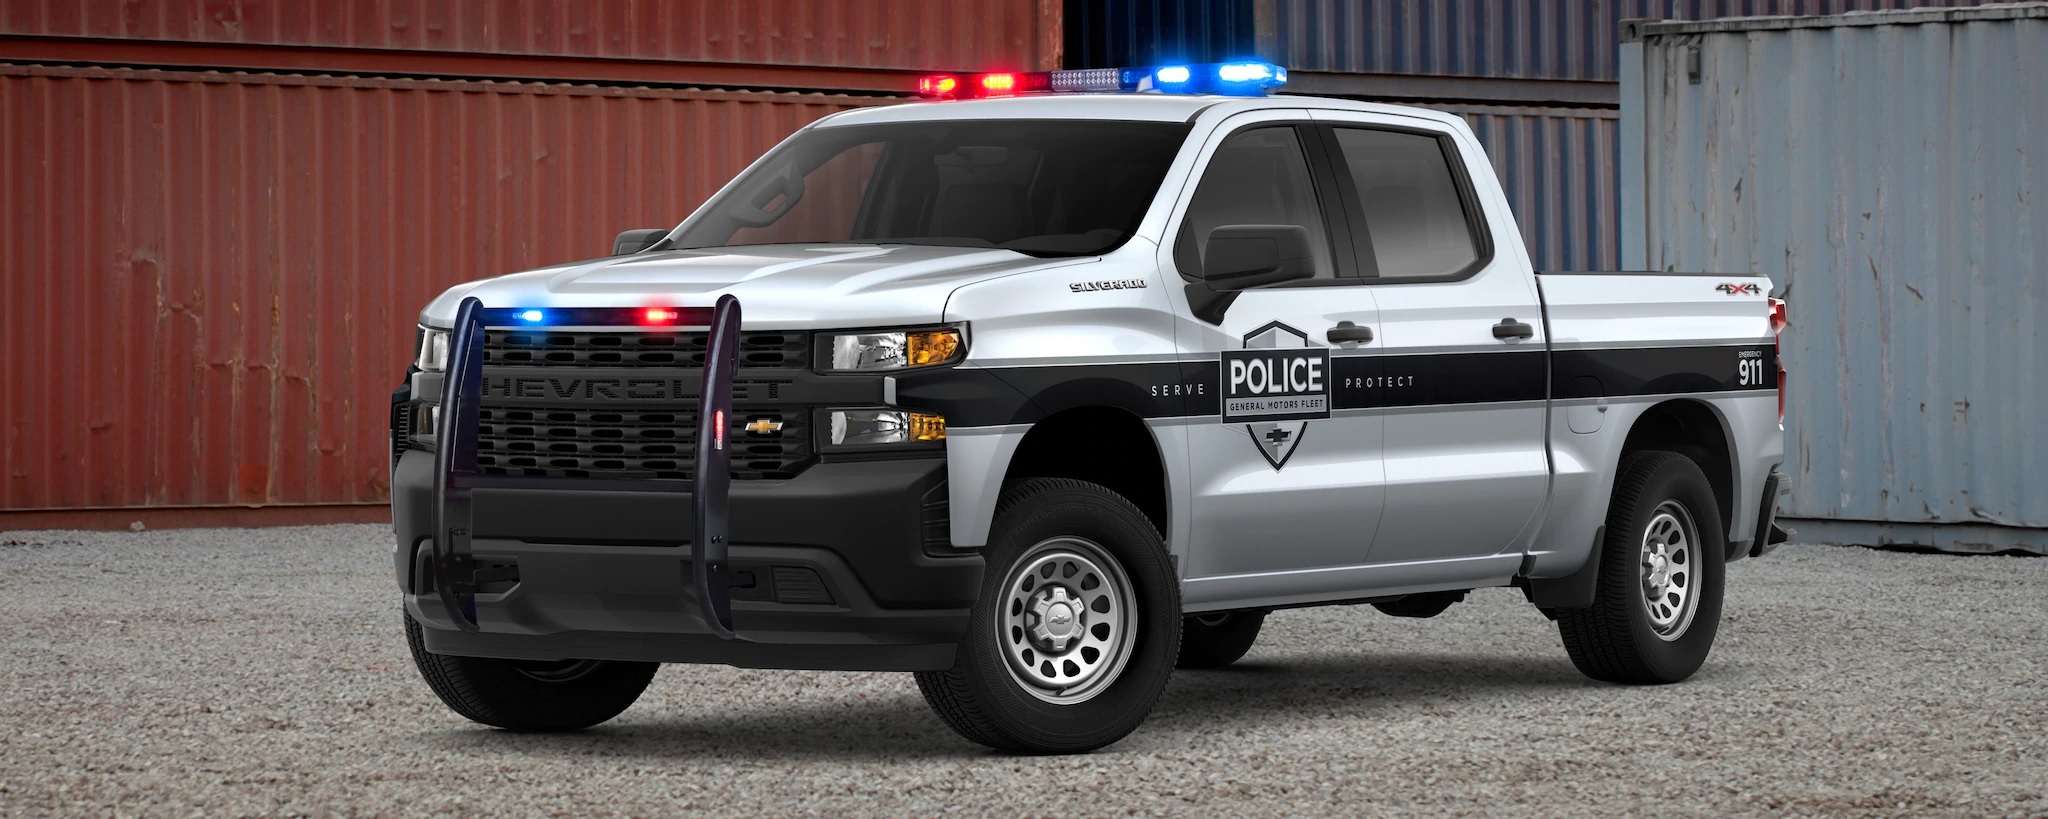 2019 Chevrolet Silverado SSV police pickup